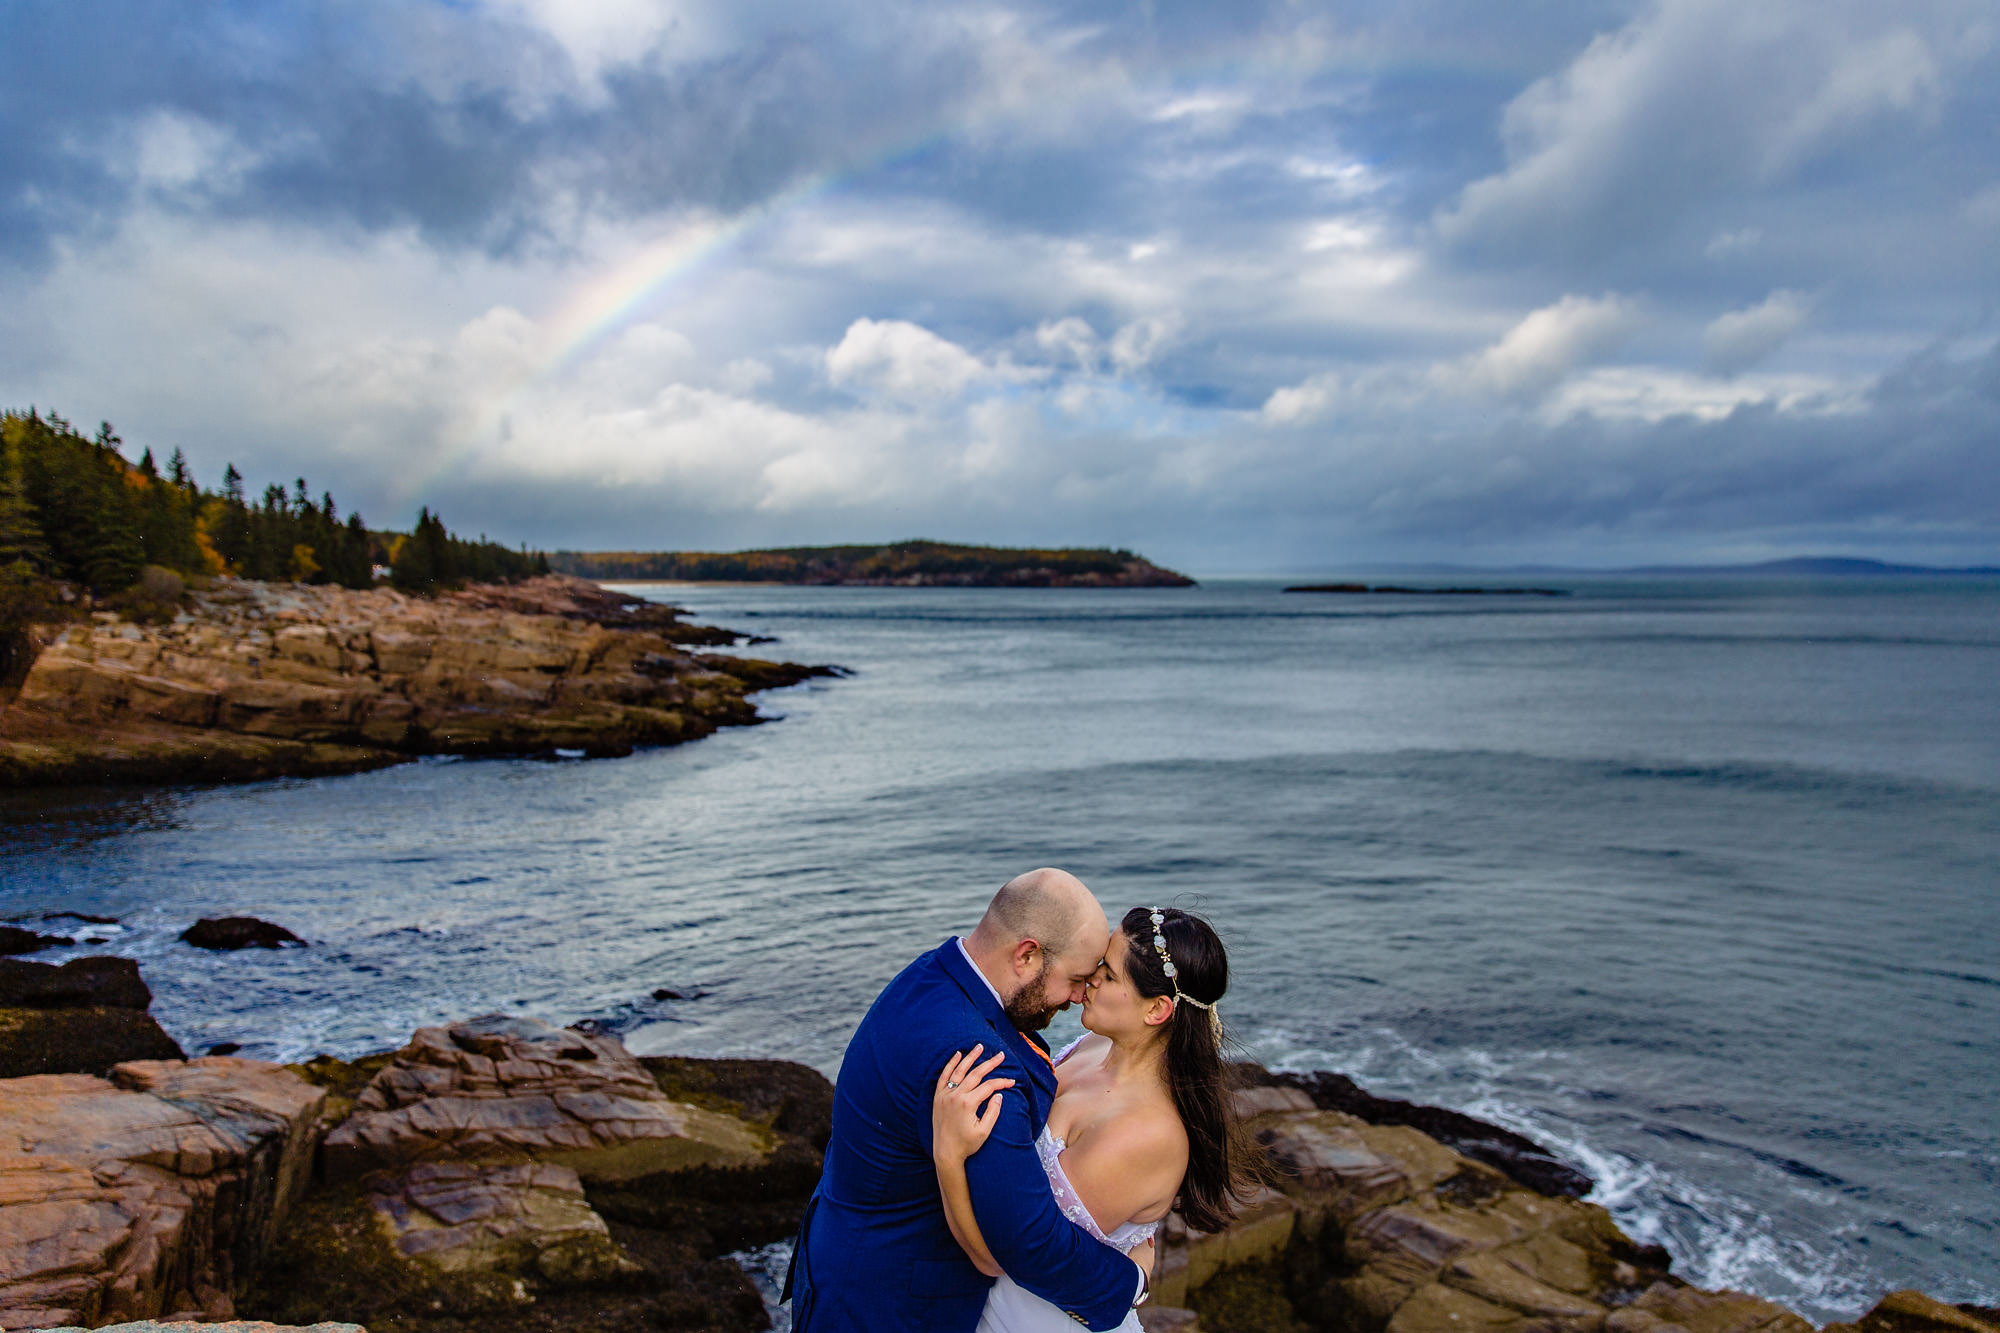 Rainbow wedding portraits taken in Acadia National Park